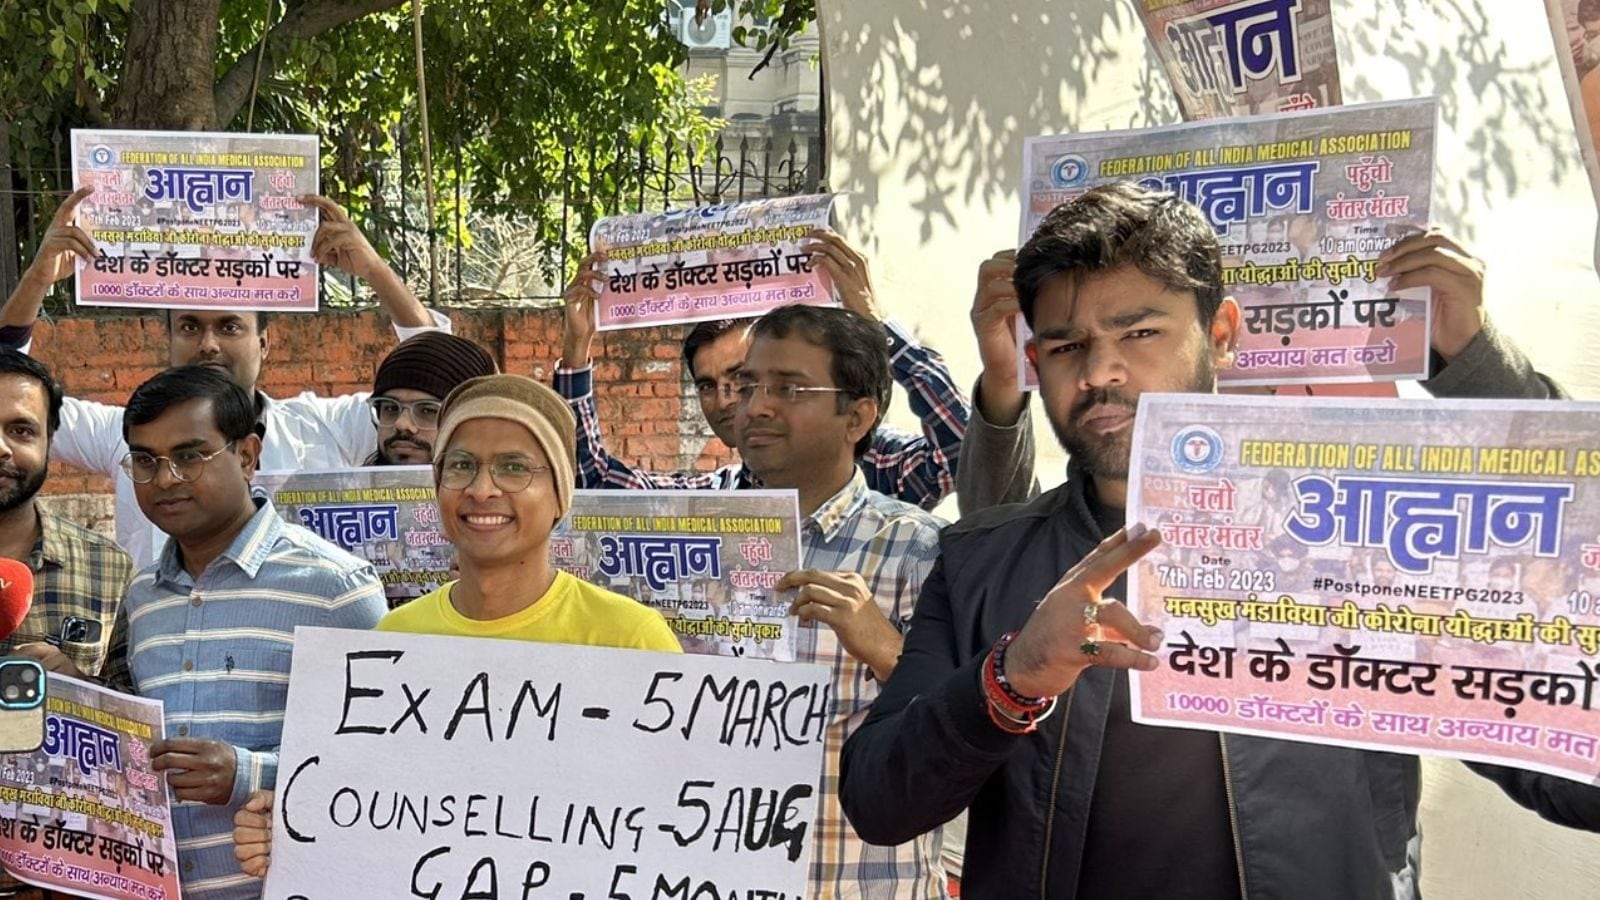 NEET PG 2023 Aspirants Hold Protests at Delhi Seeking Exam Postponement